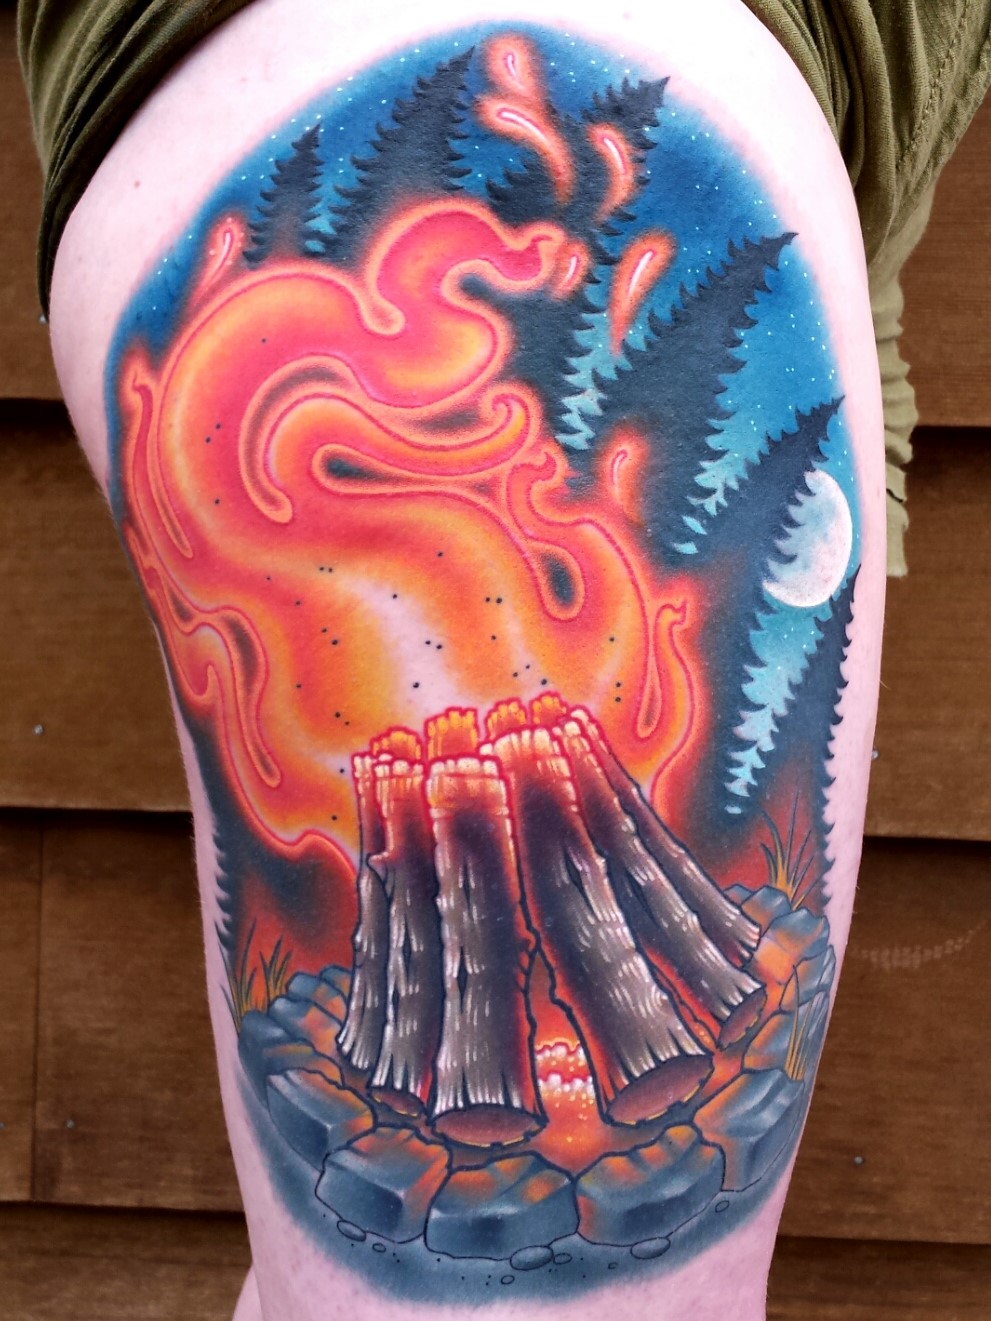 Camp fire Bon fire Tattoo by Cracker Joe Swider in Connecticut